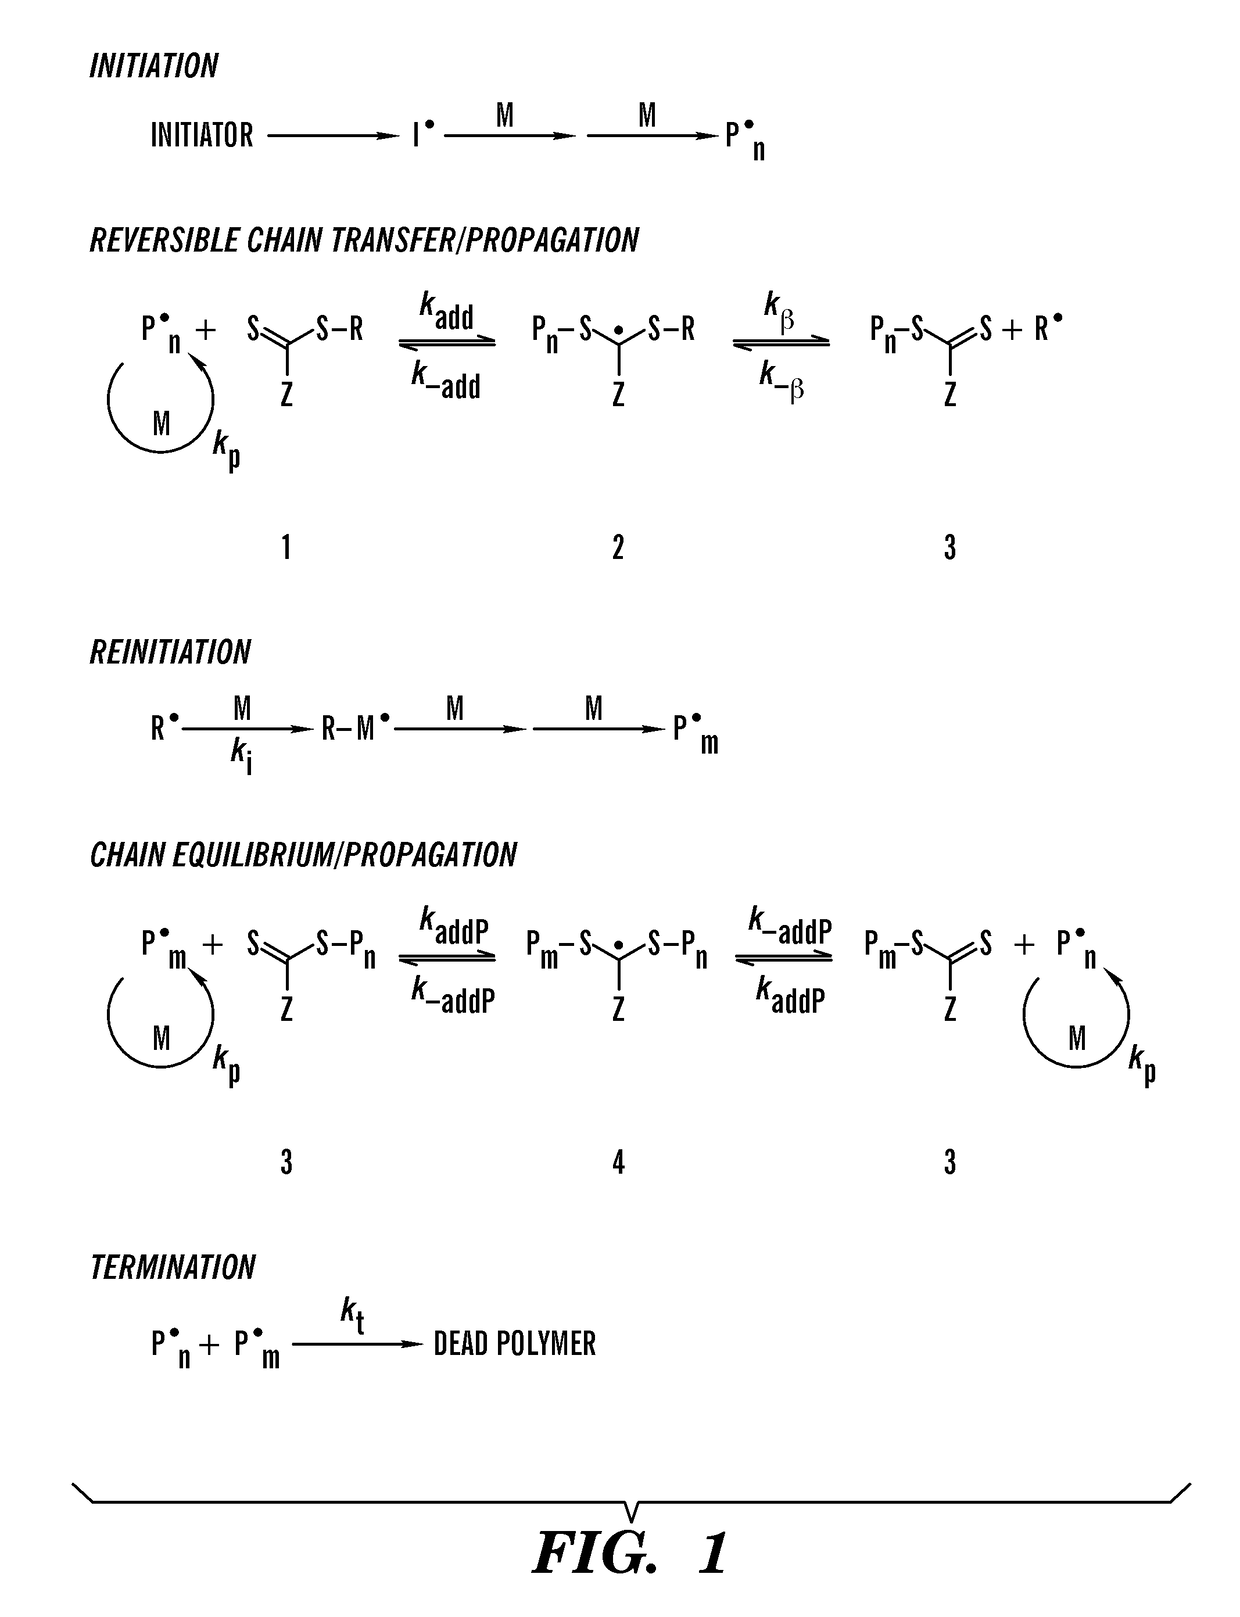 Thermoplastic elastomers via reversible addition-fragmentation chain transfer polymerization of triglycerides